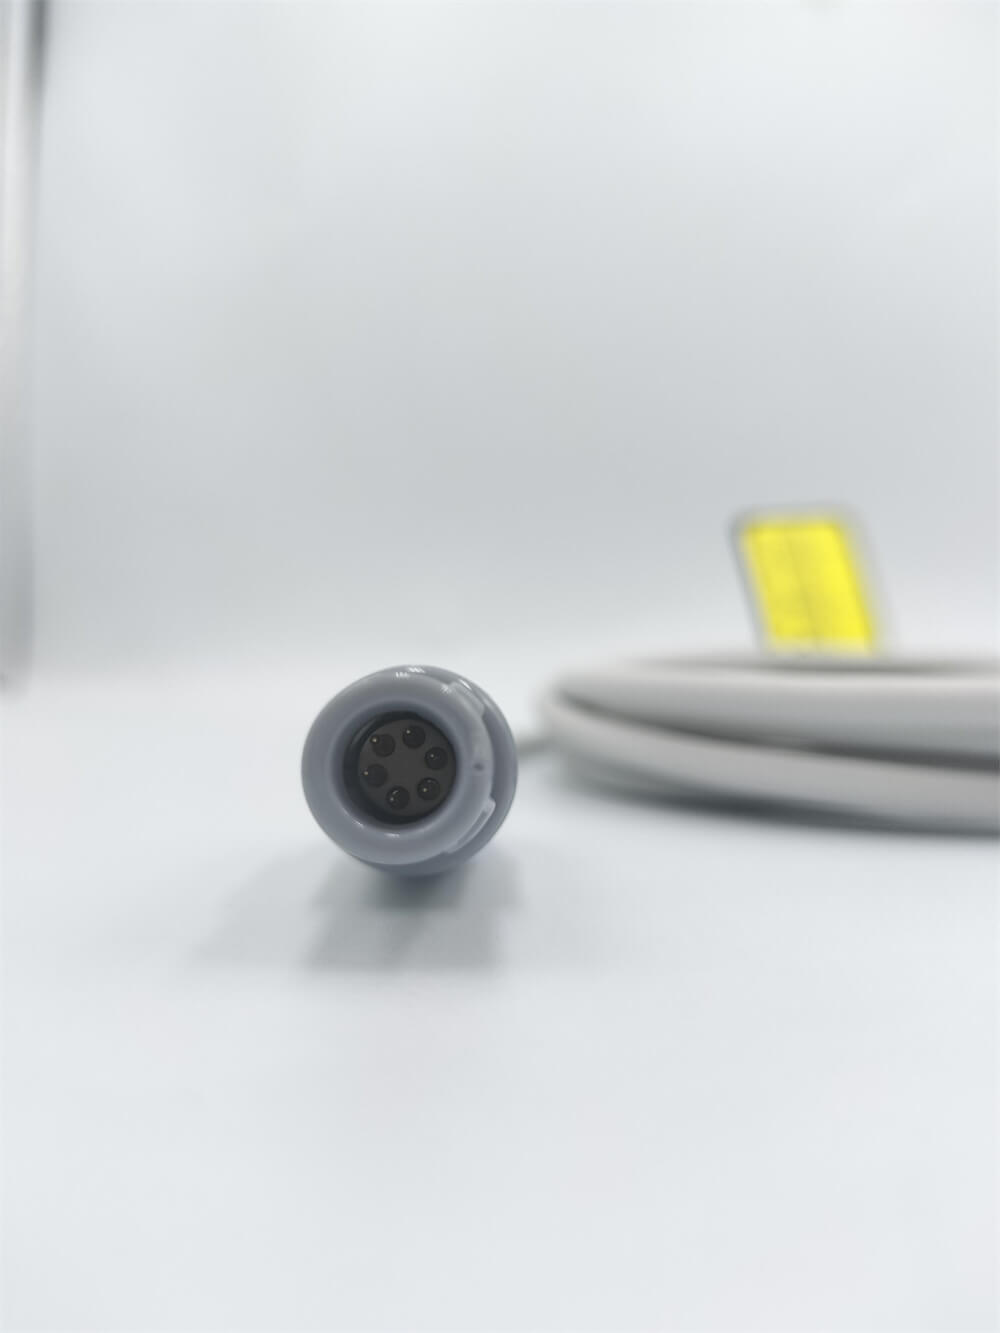 Sensor Spo2 reutilizável Neonate Wrap 6 Pin compatível Contec